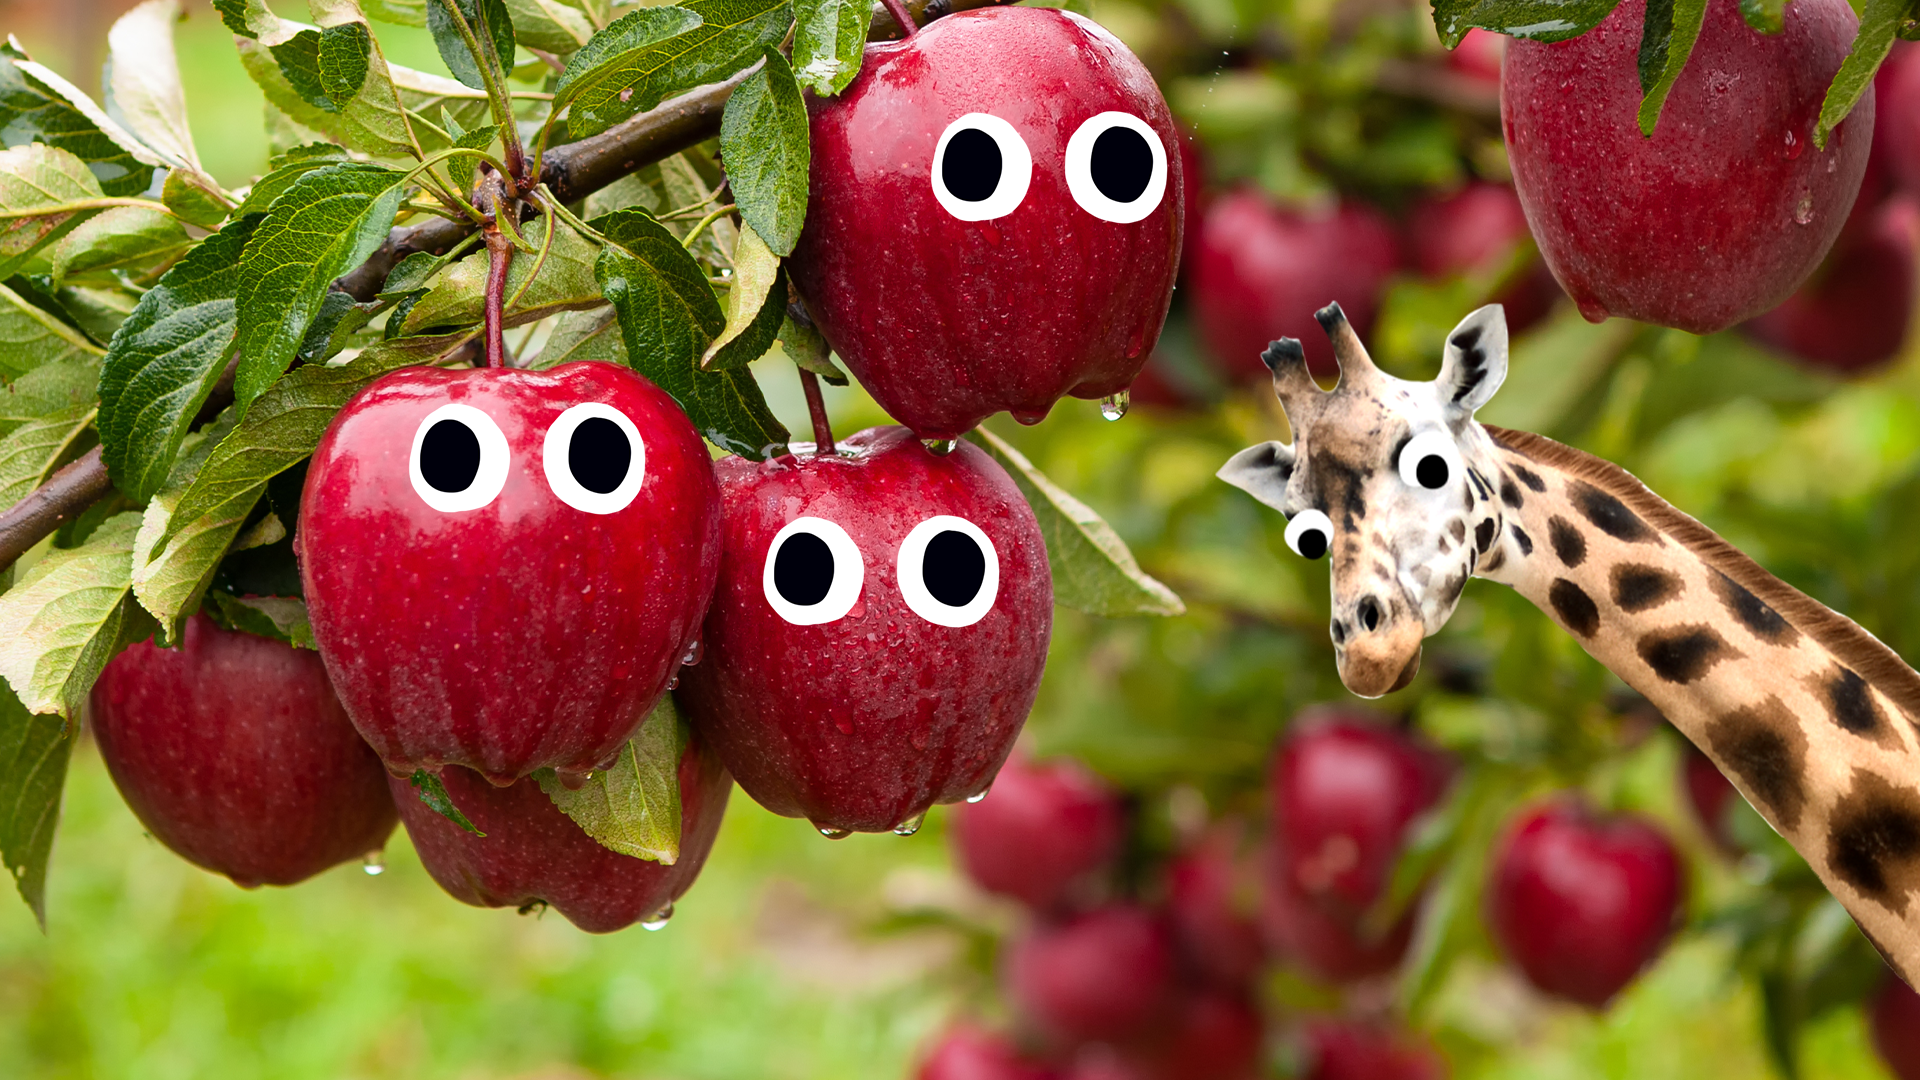 Apples on tree and Beano giraffe